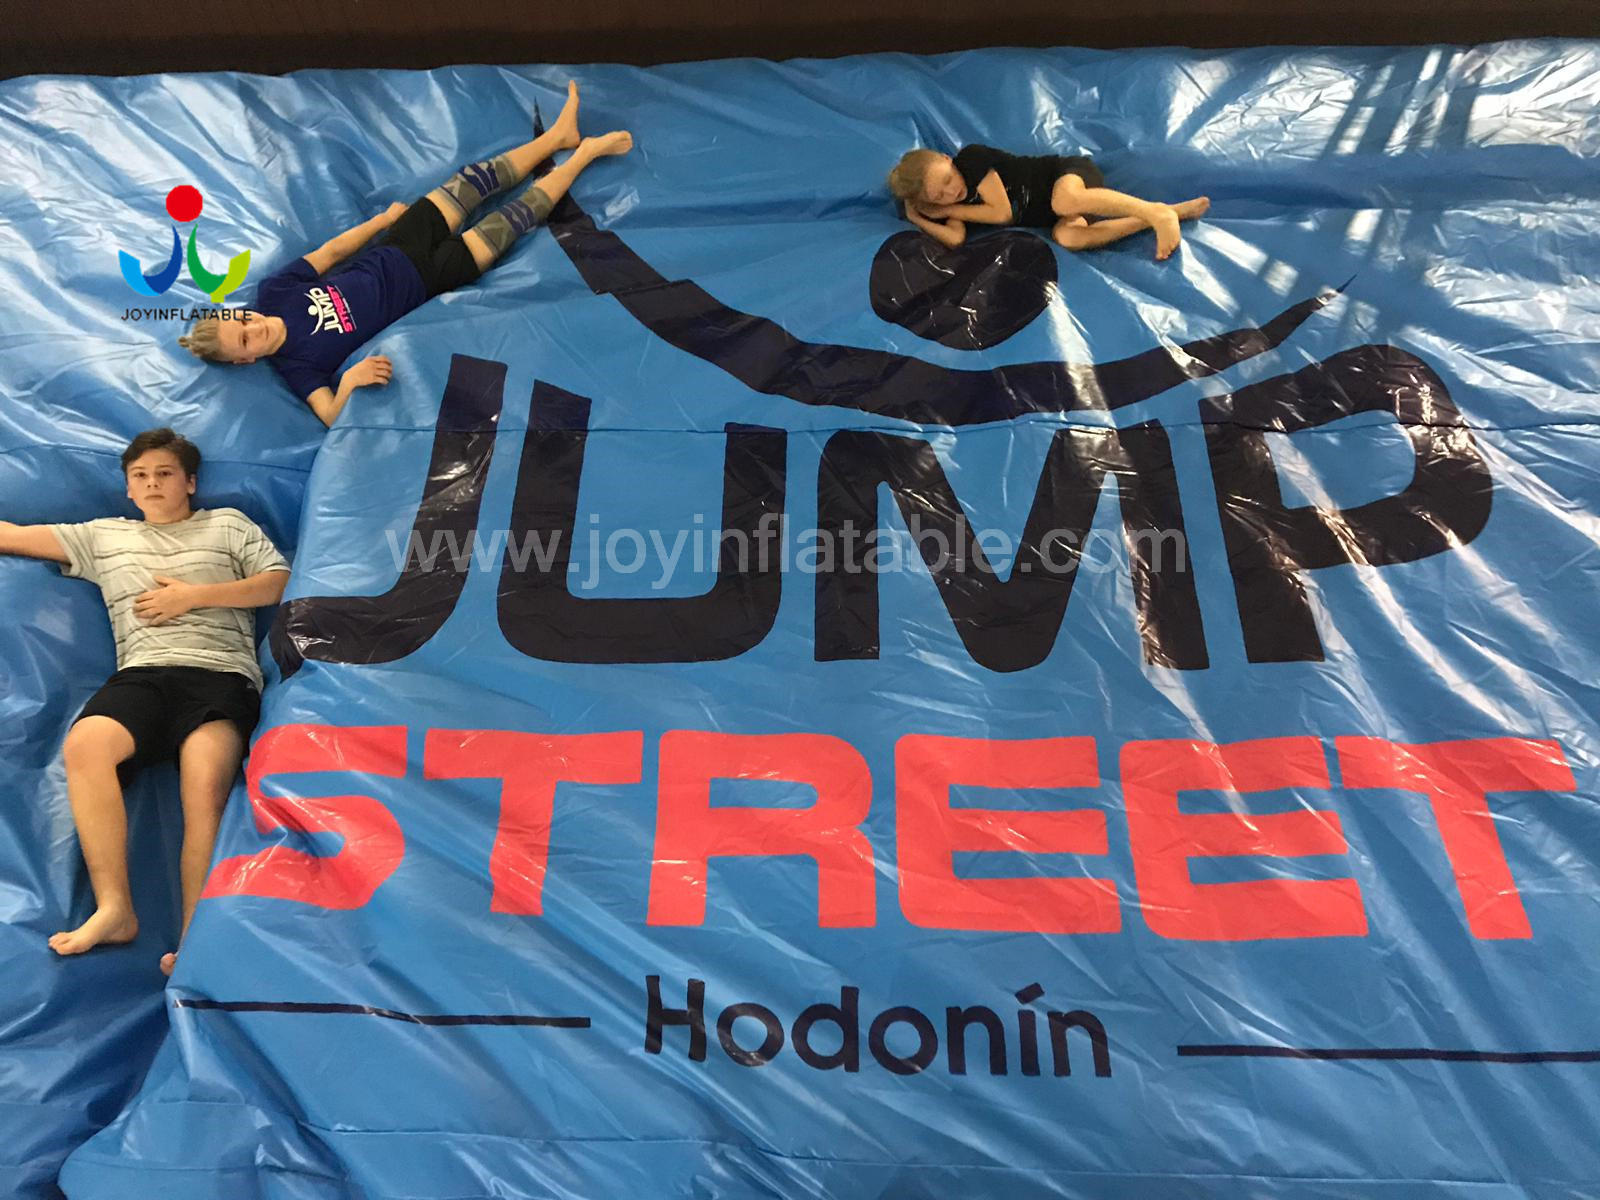 JOY Inflatable bag jump airbag price vendor for skiing